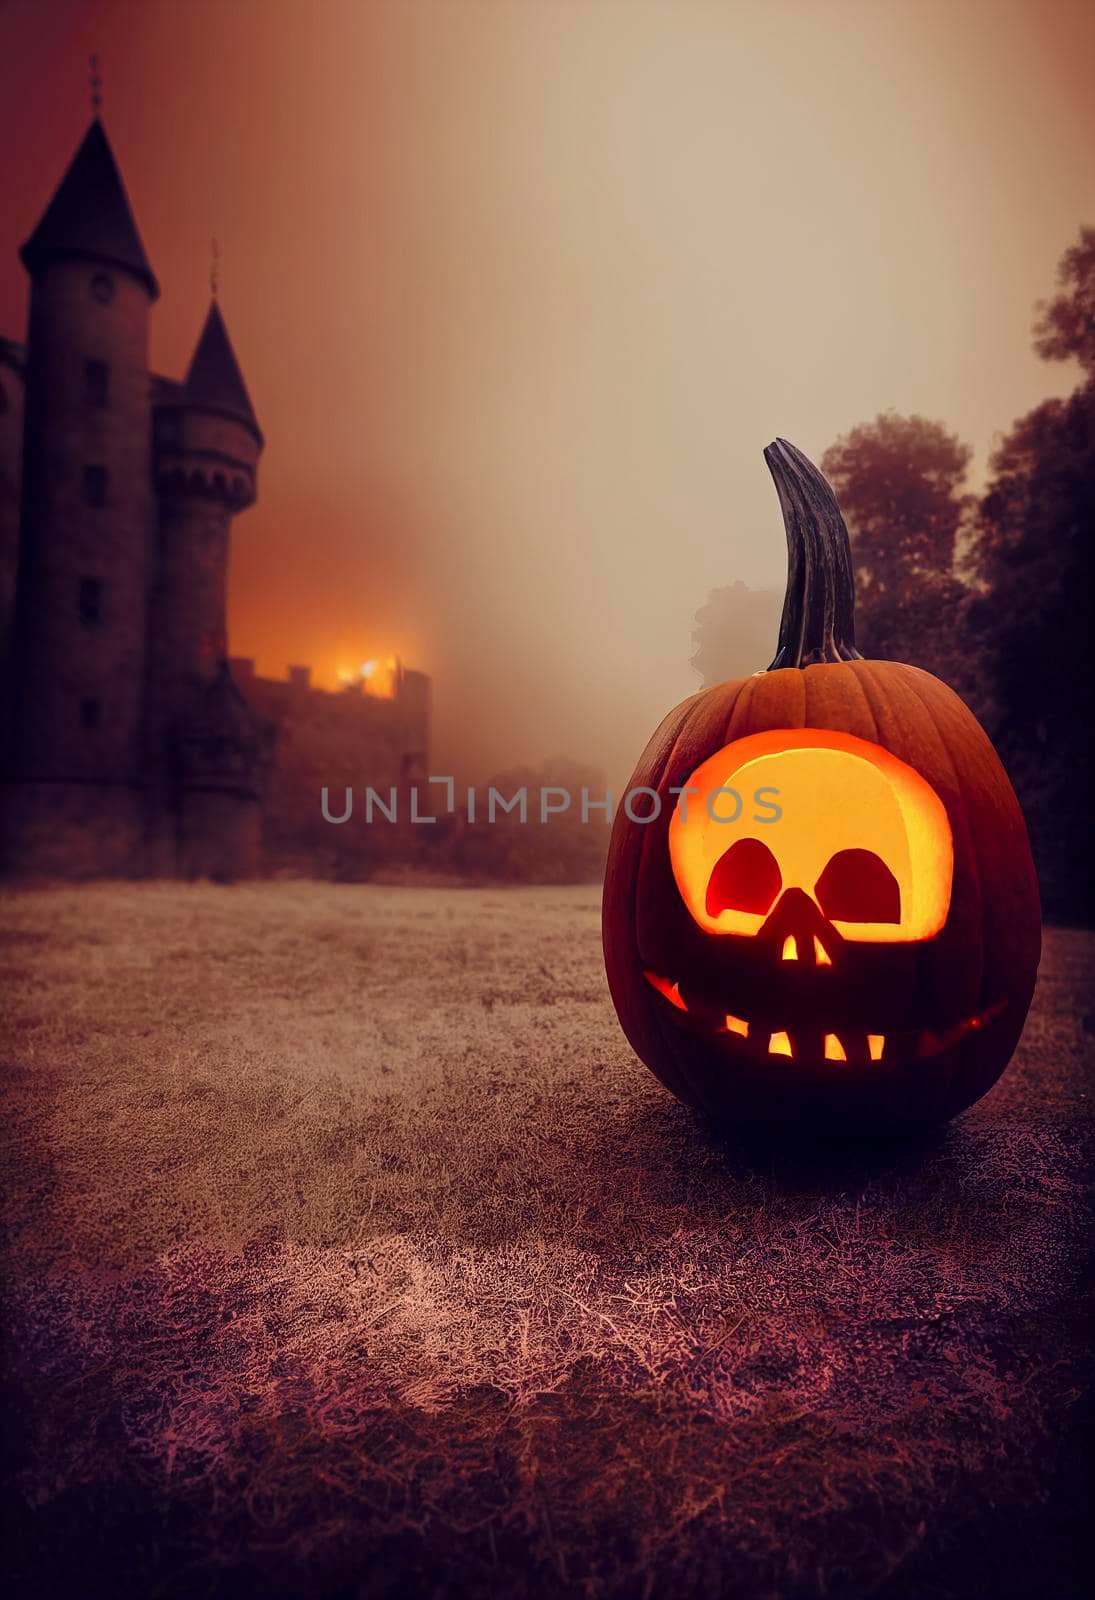 Pumpkins In Graveyard In The Spooky Night - Halloween Backdrop. by jbruiz78